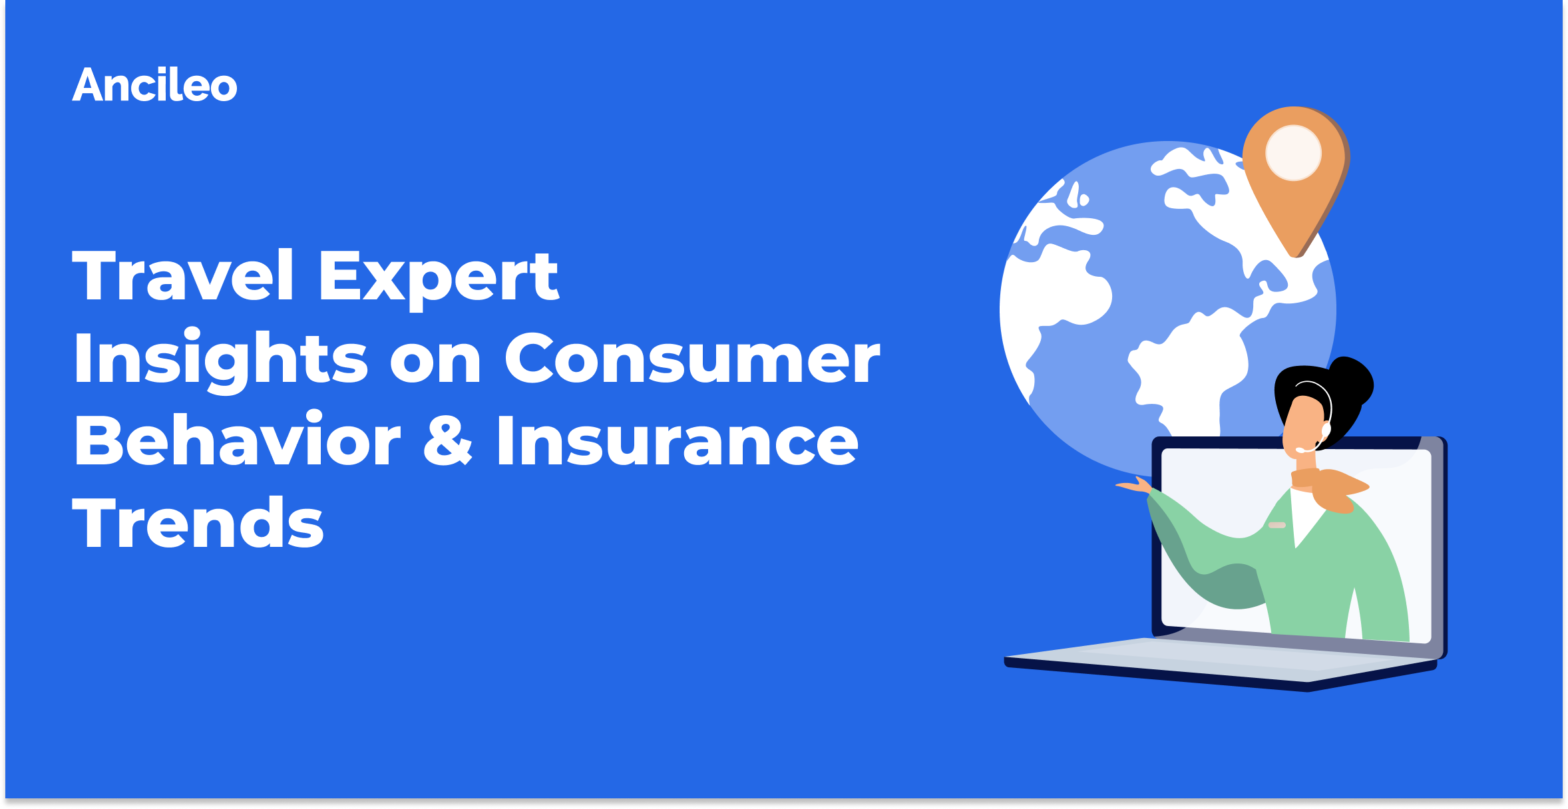 Travel Expert Insights on Consumer Behavior & Insurance Trends